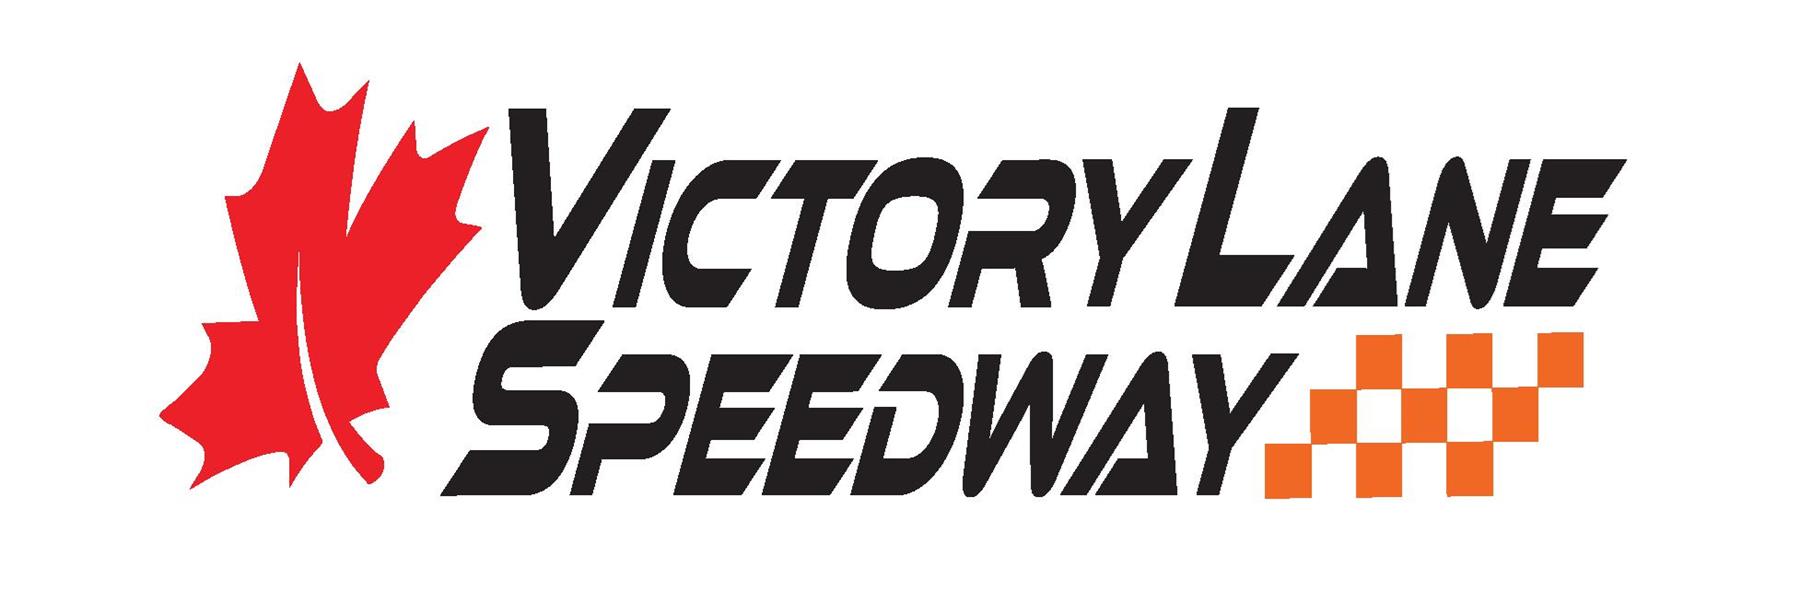 9/30/2017 - Victory Lane Speedway